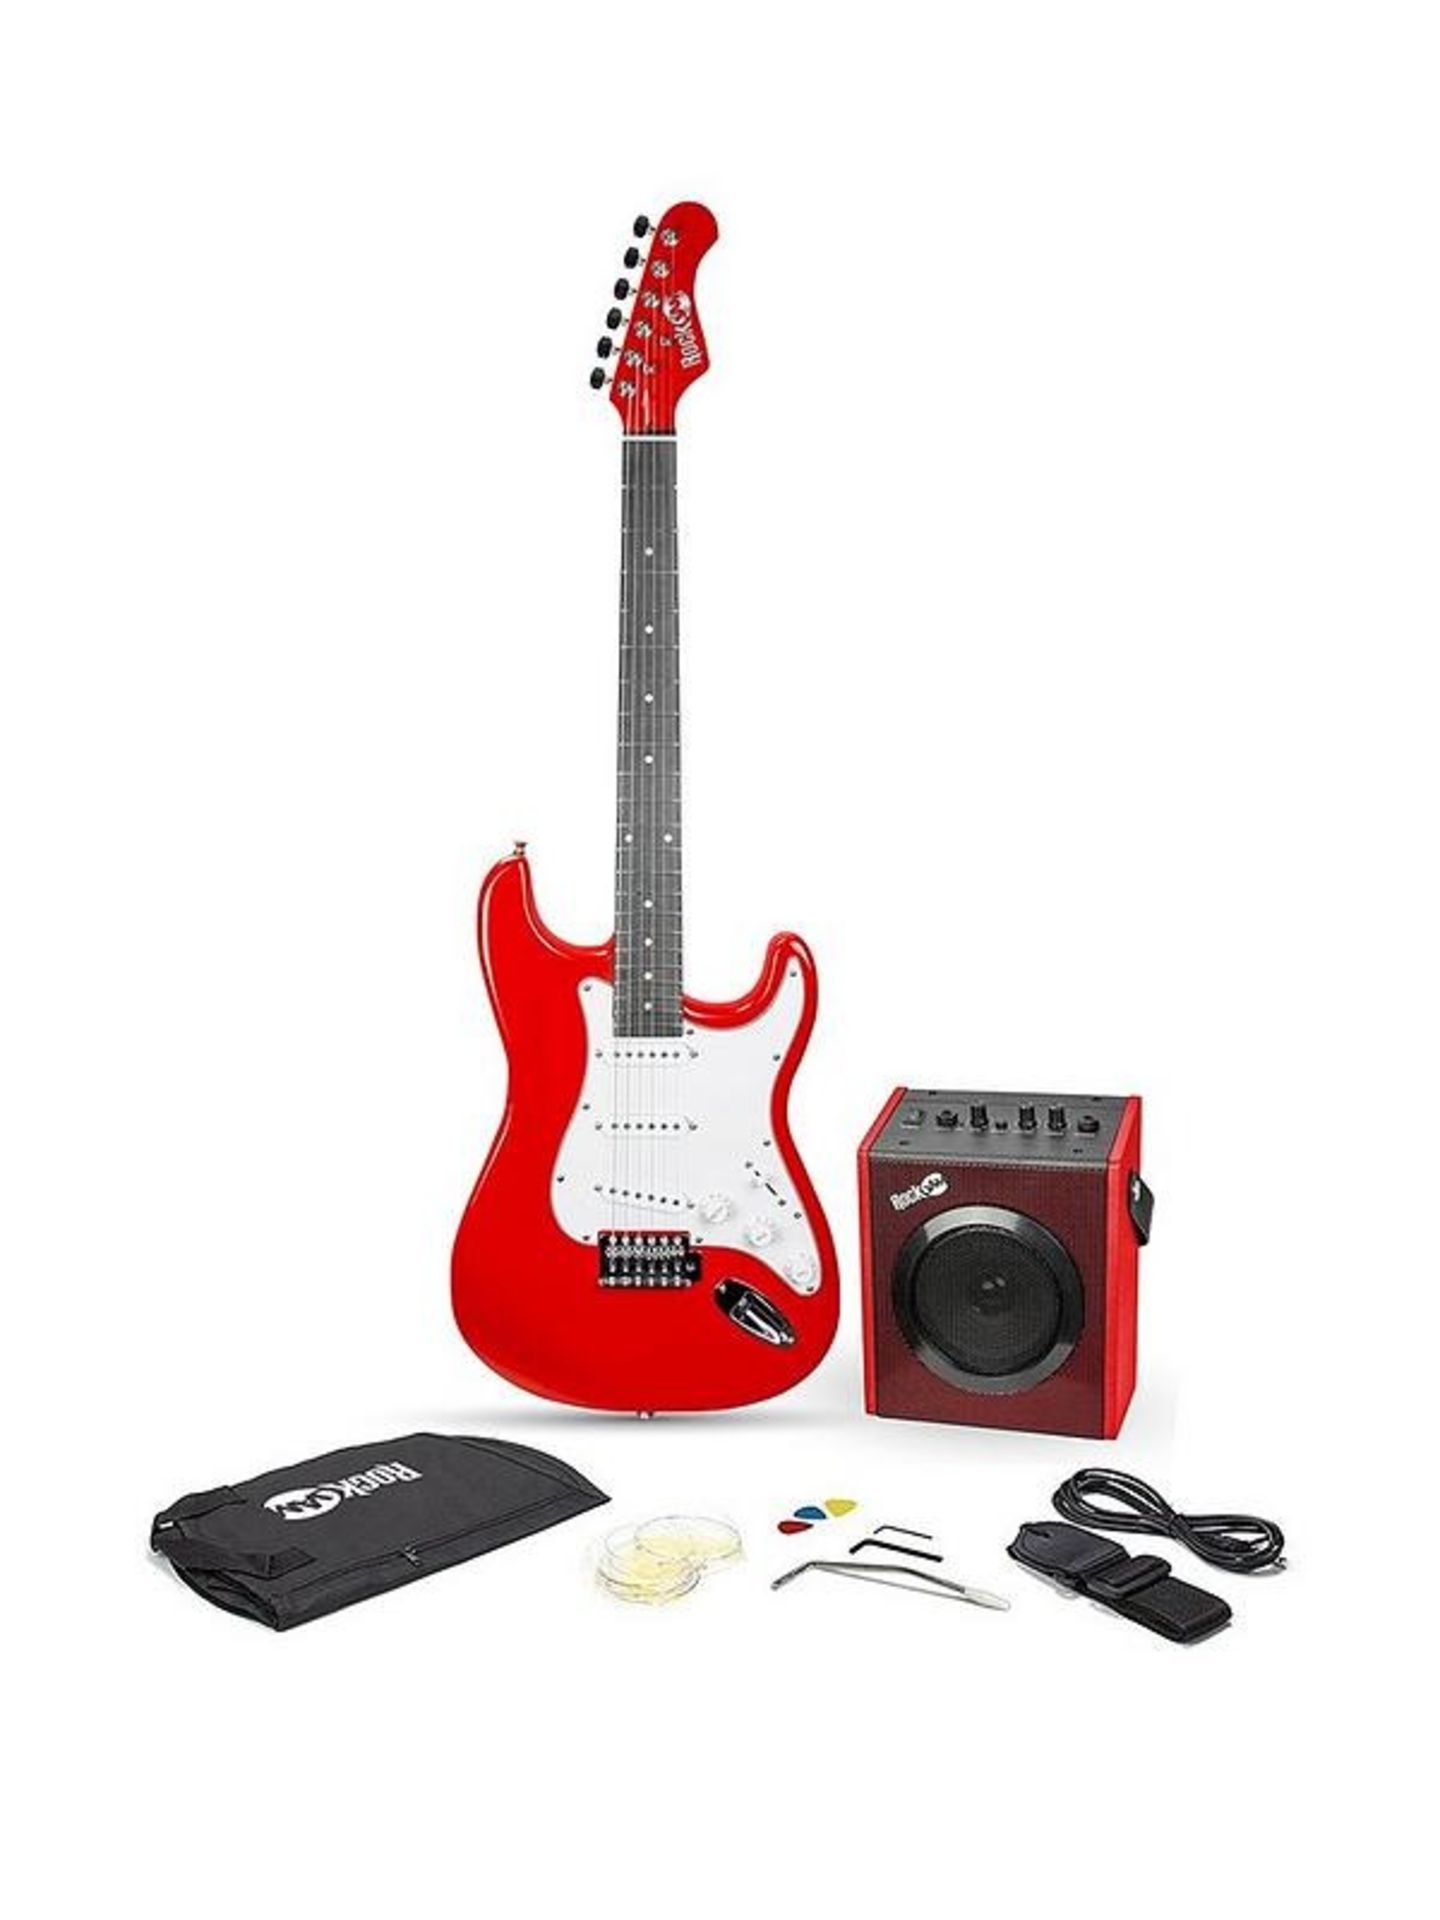 RockJam Full Size Electric Guitar Super Kit RJEG06 Red - ER20